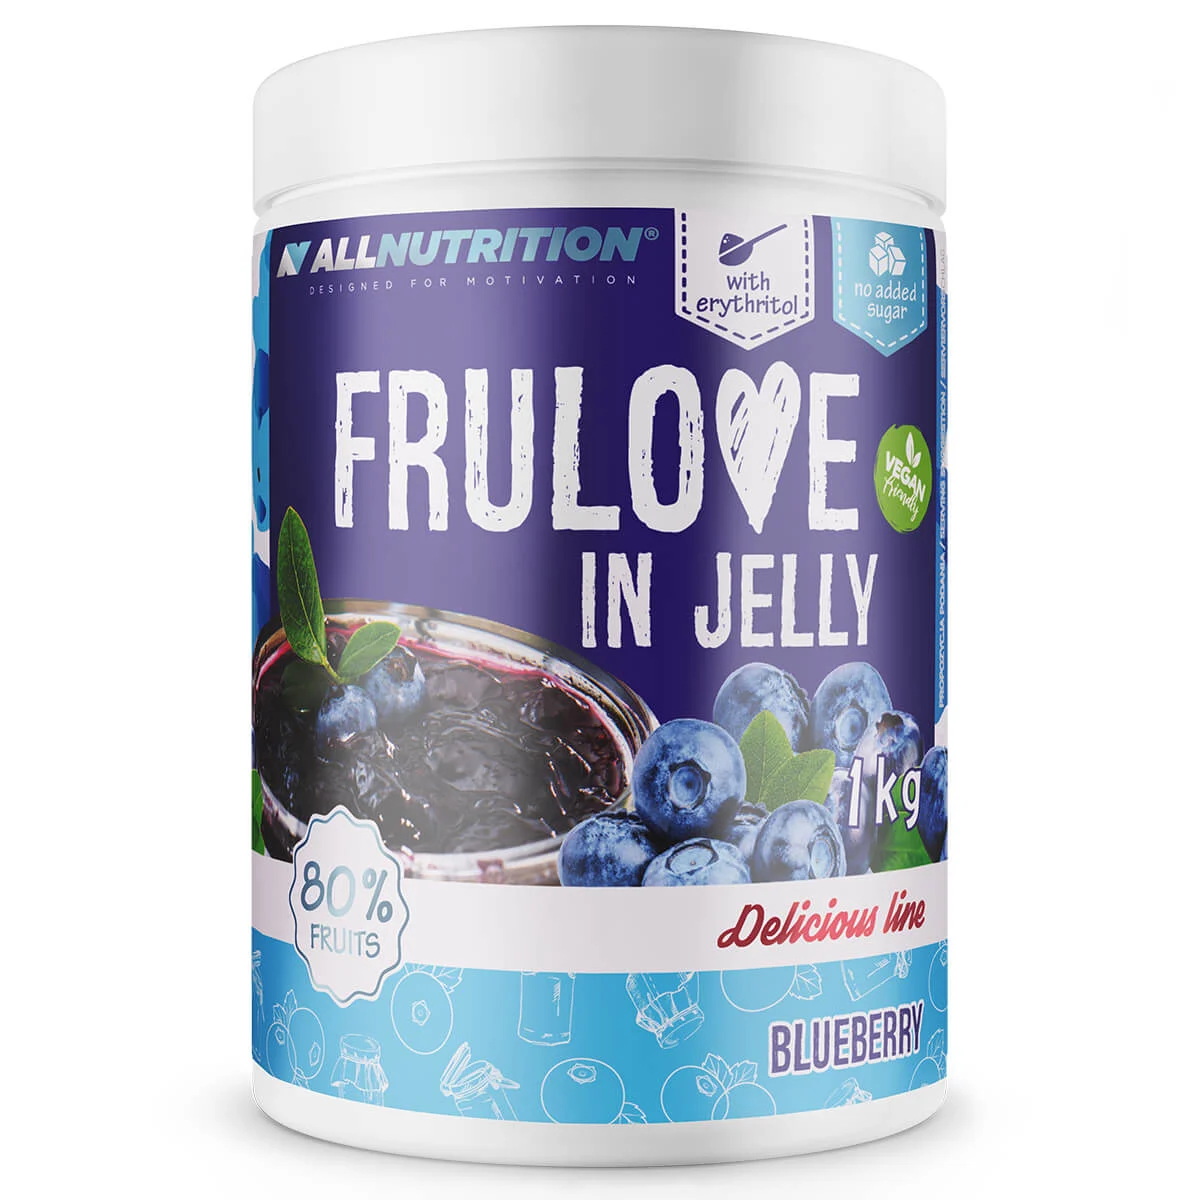 Frulove in jelly